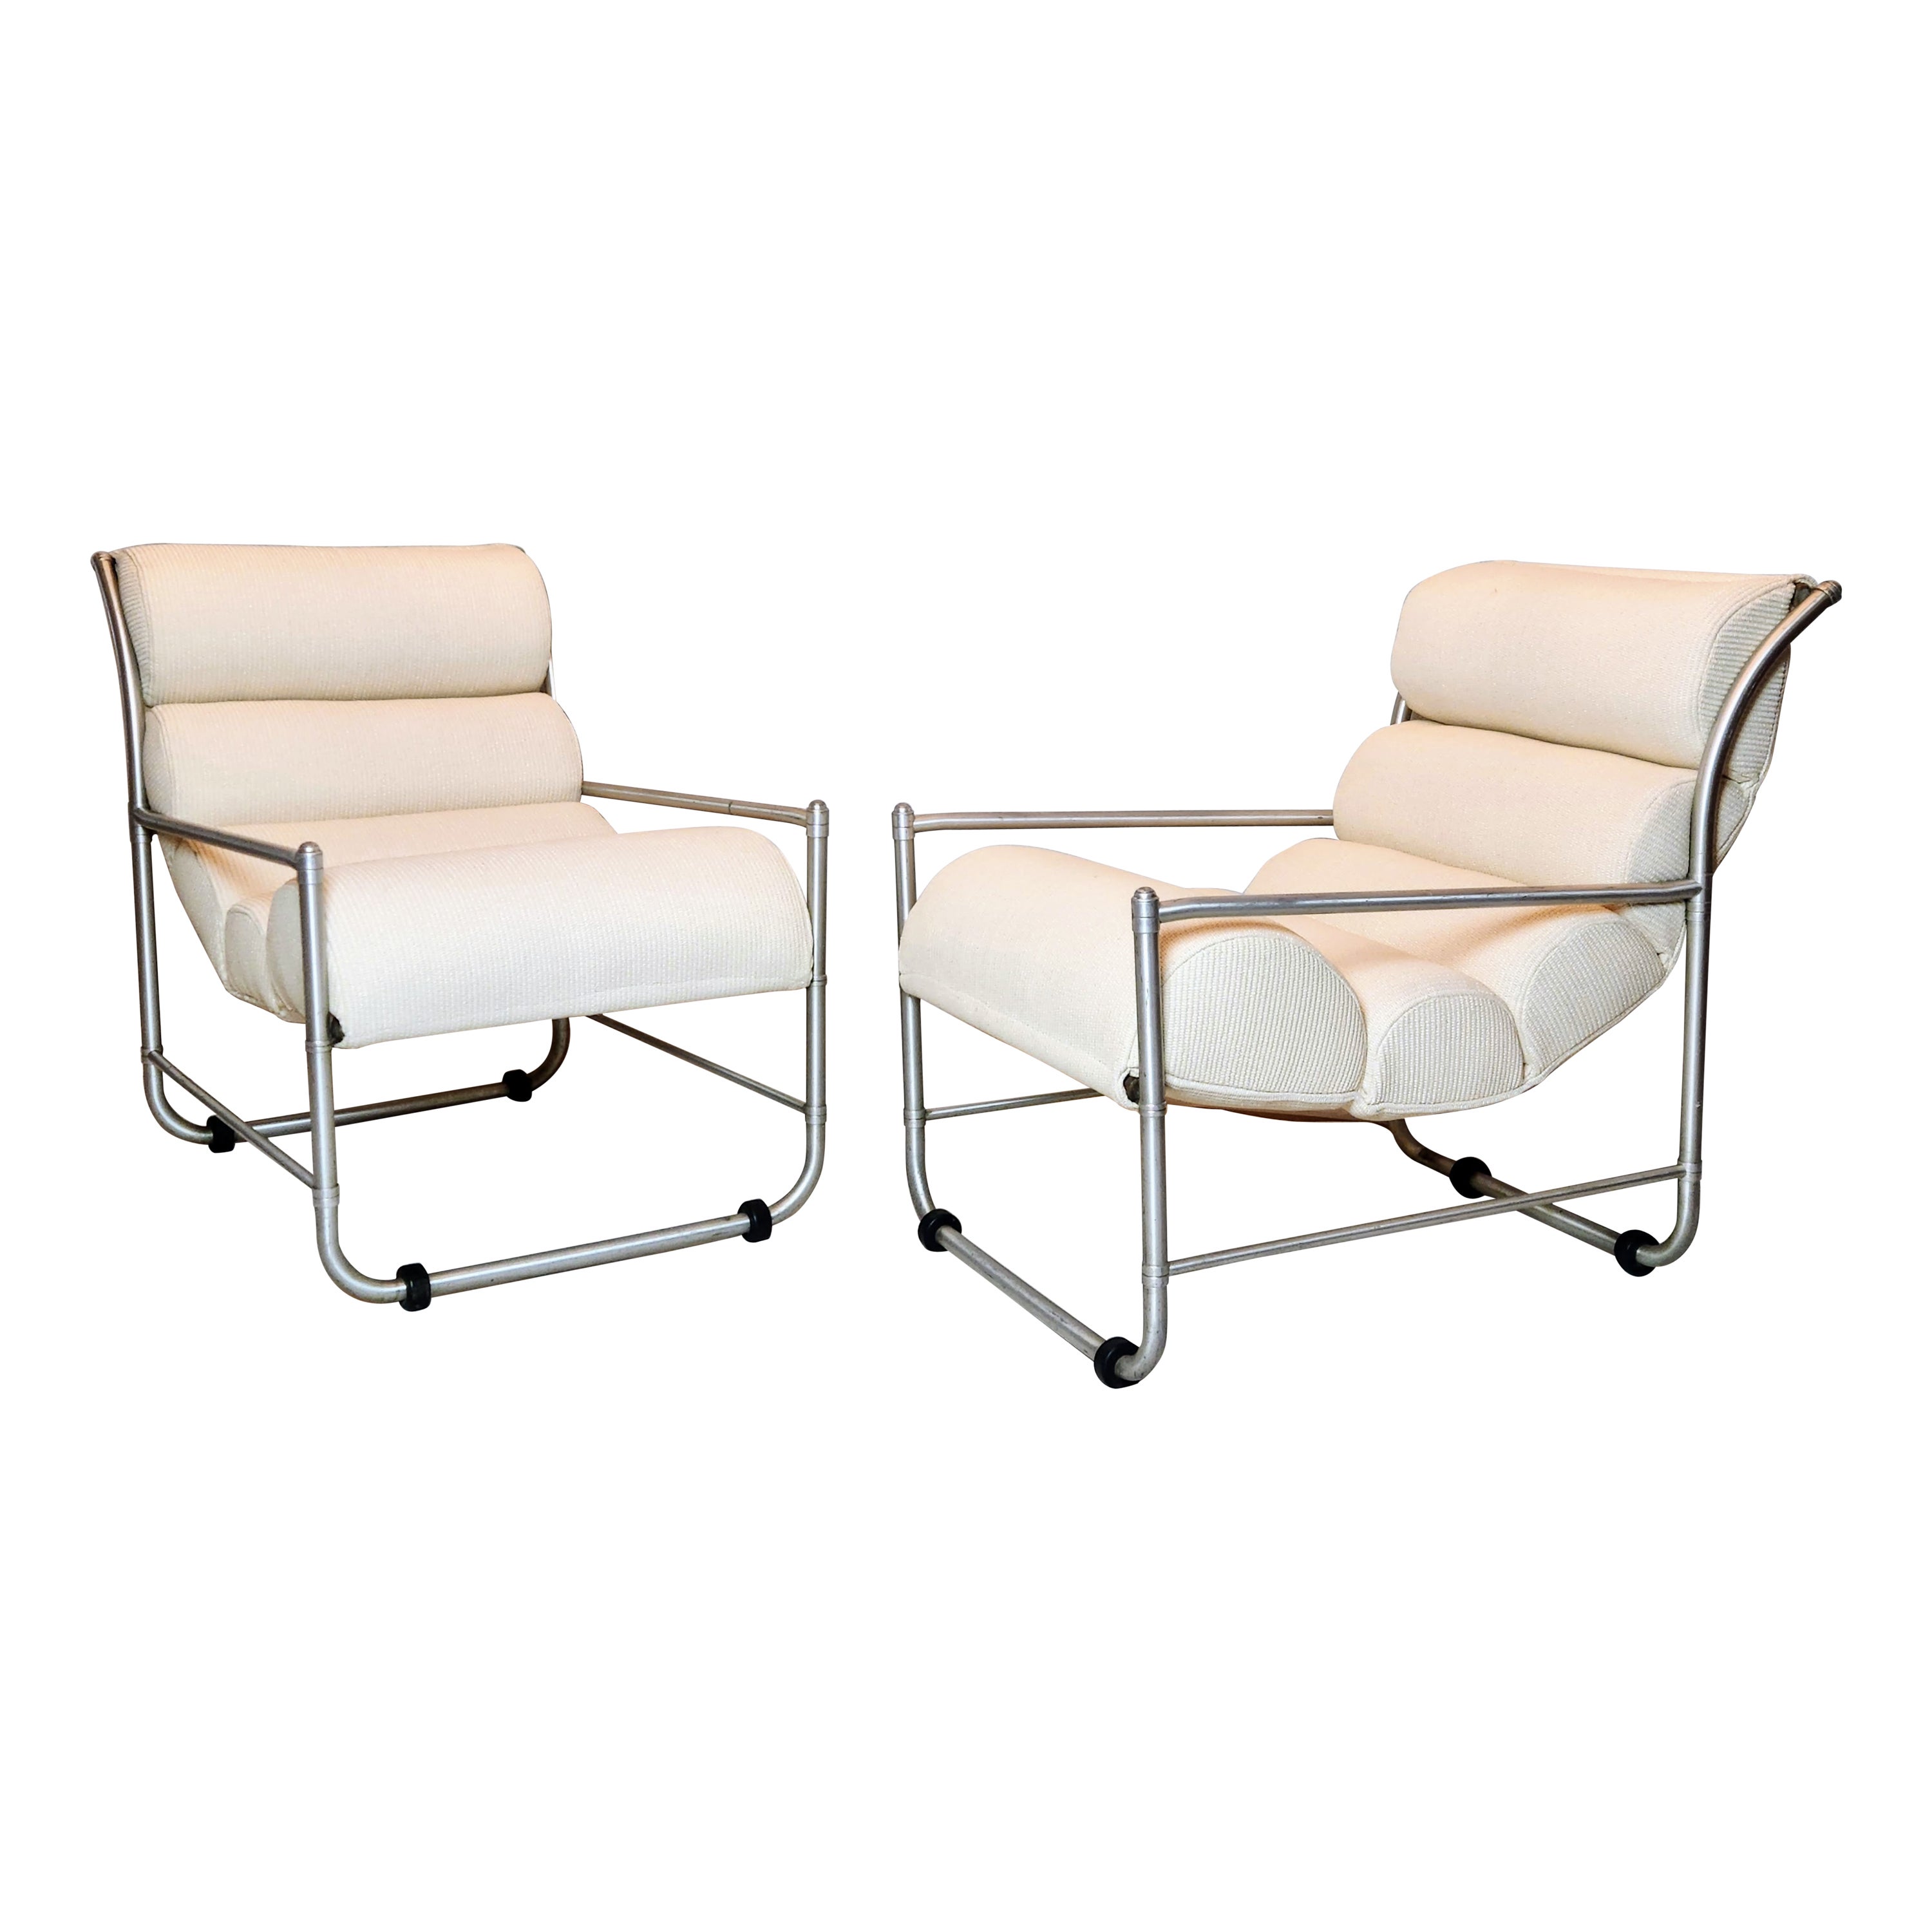 Pair of Aluminum Warren McArthur Sling Chaises / Lounge Chairs, 1938